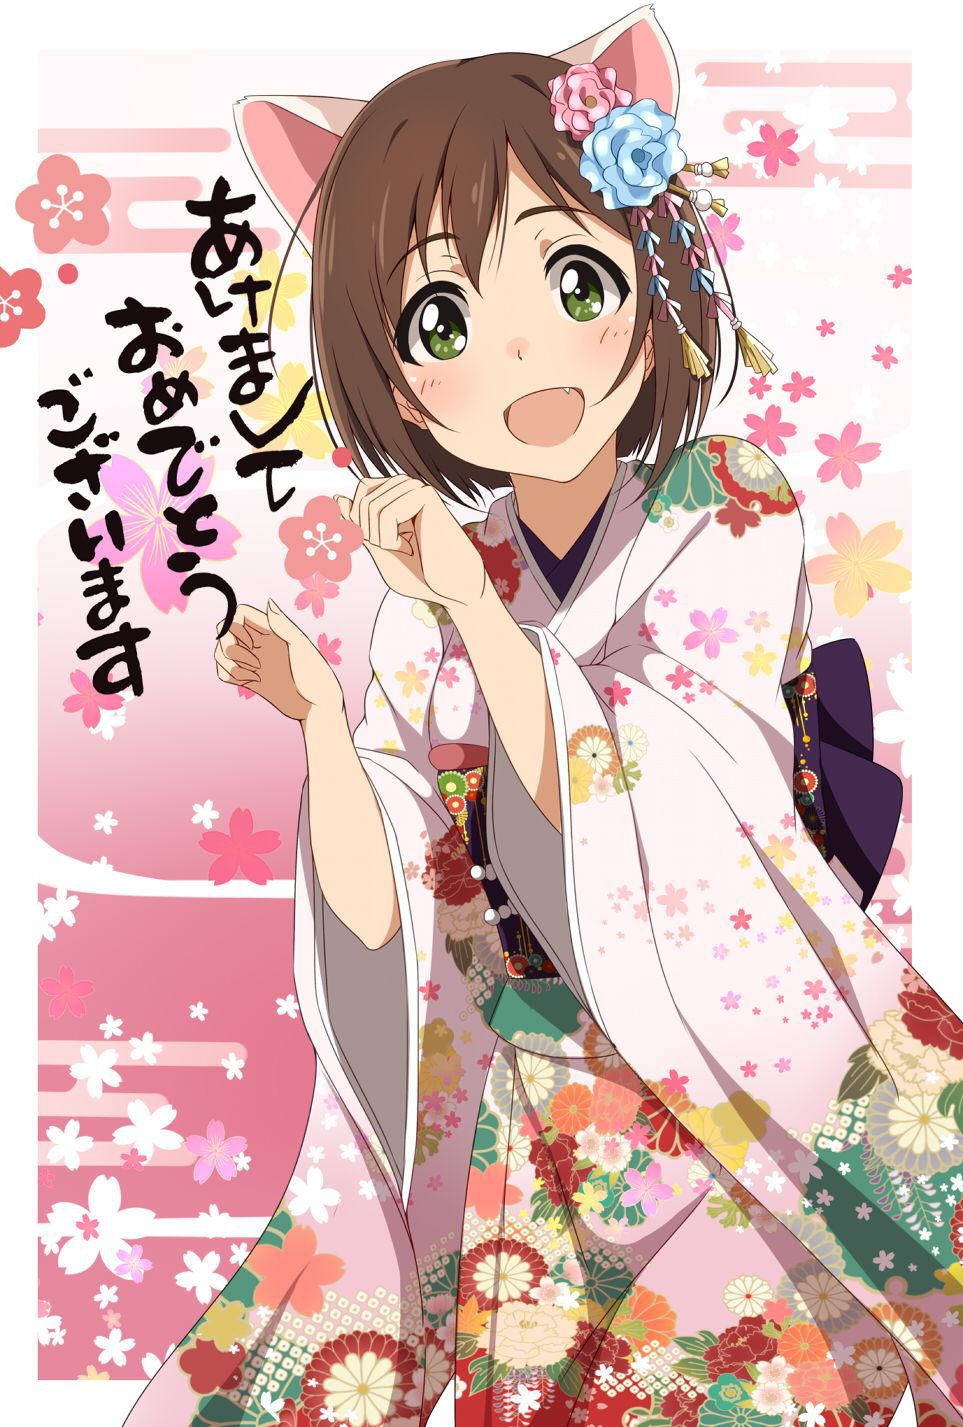 [Secondary-ZIP: coming of age day so... Rather than haregi-kimono 2016 new year kimono girl pictures 100 62